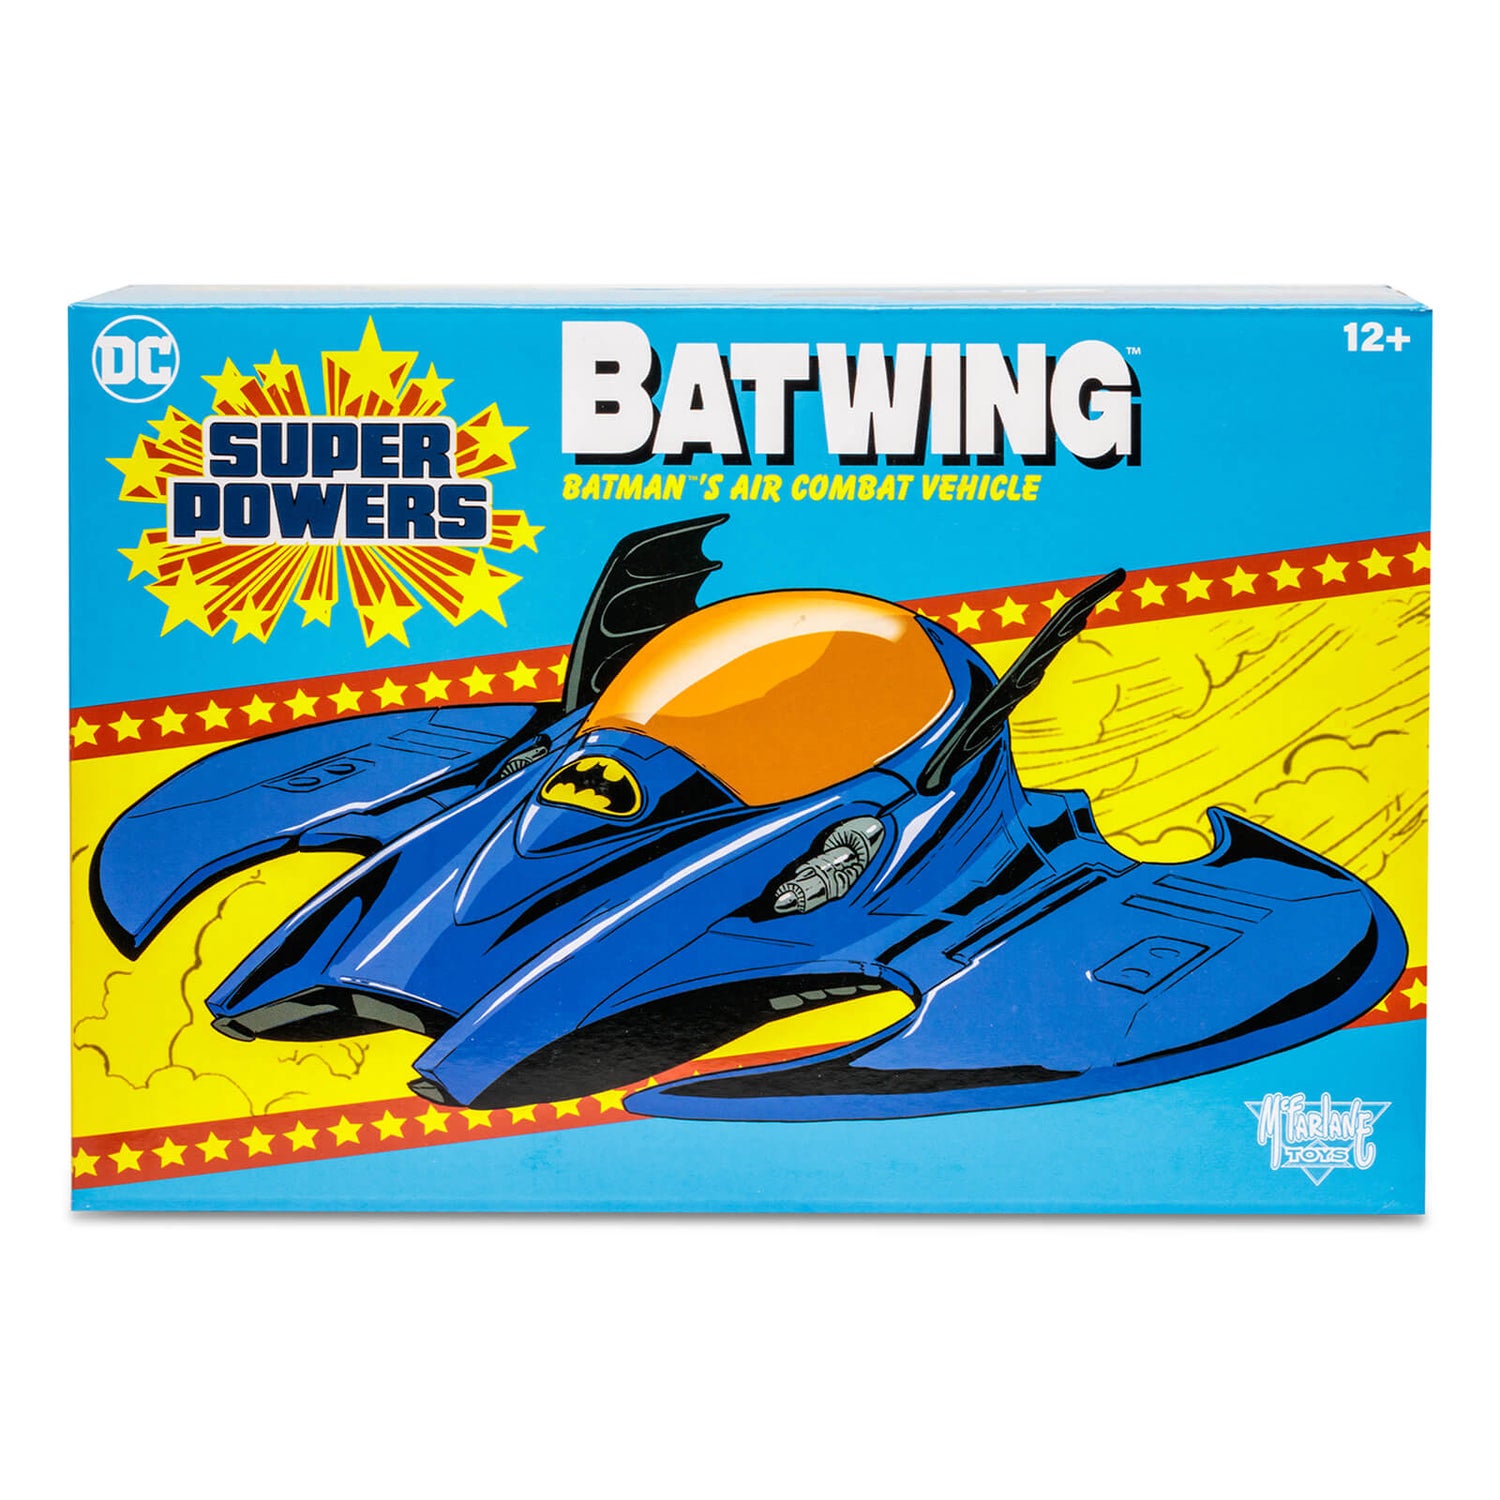 McFarlane DC Direct Super Powers Vehicle Batwing